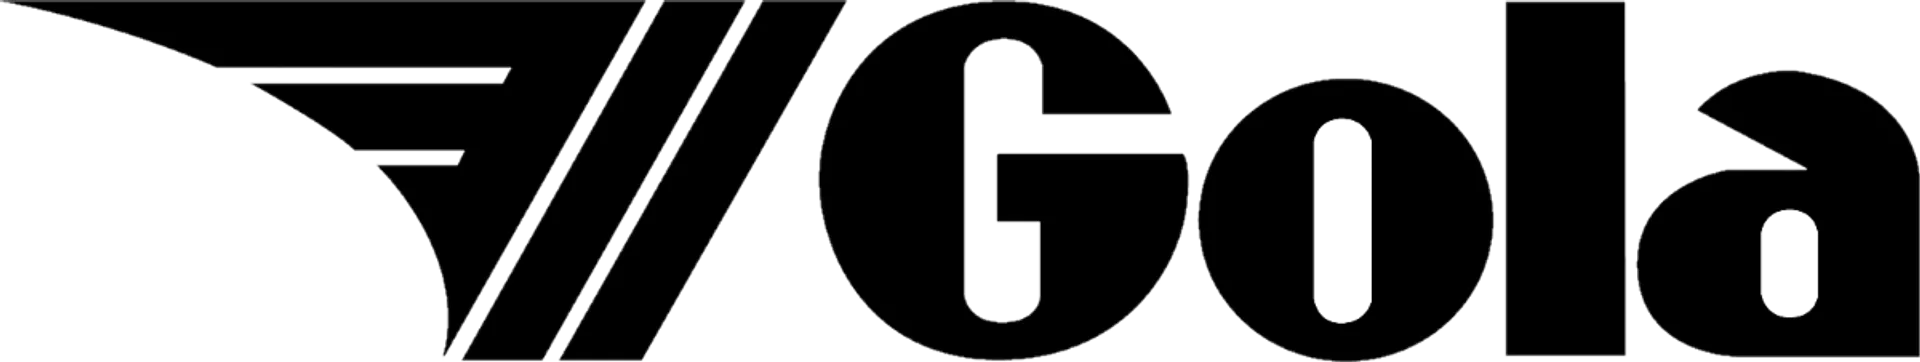 GOLA logo